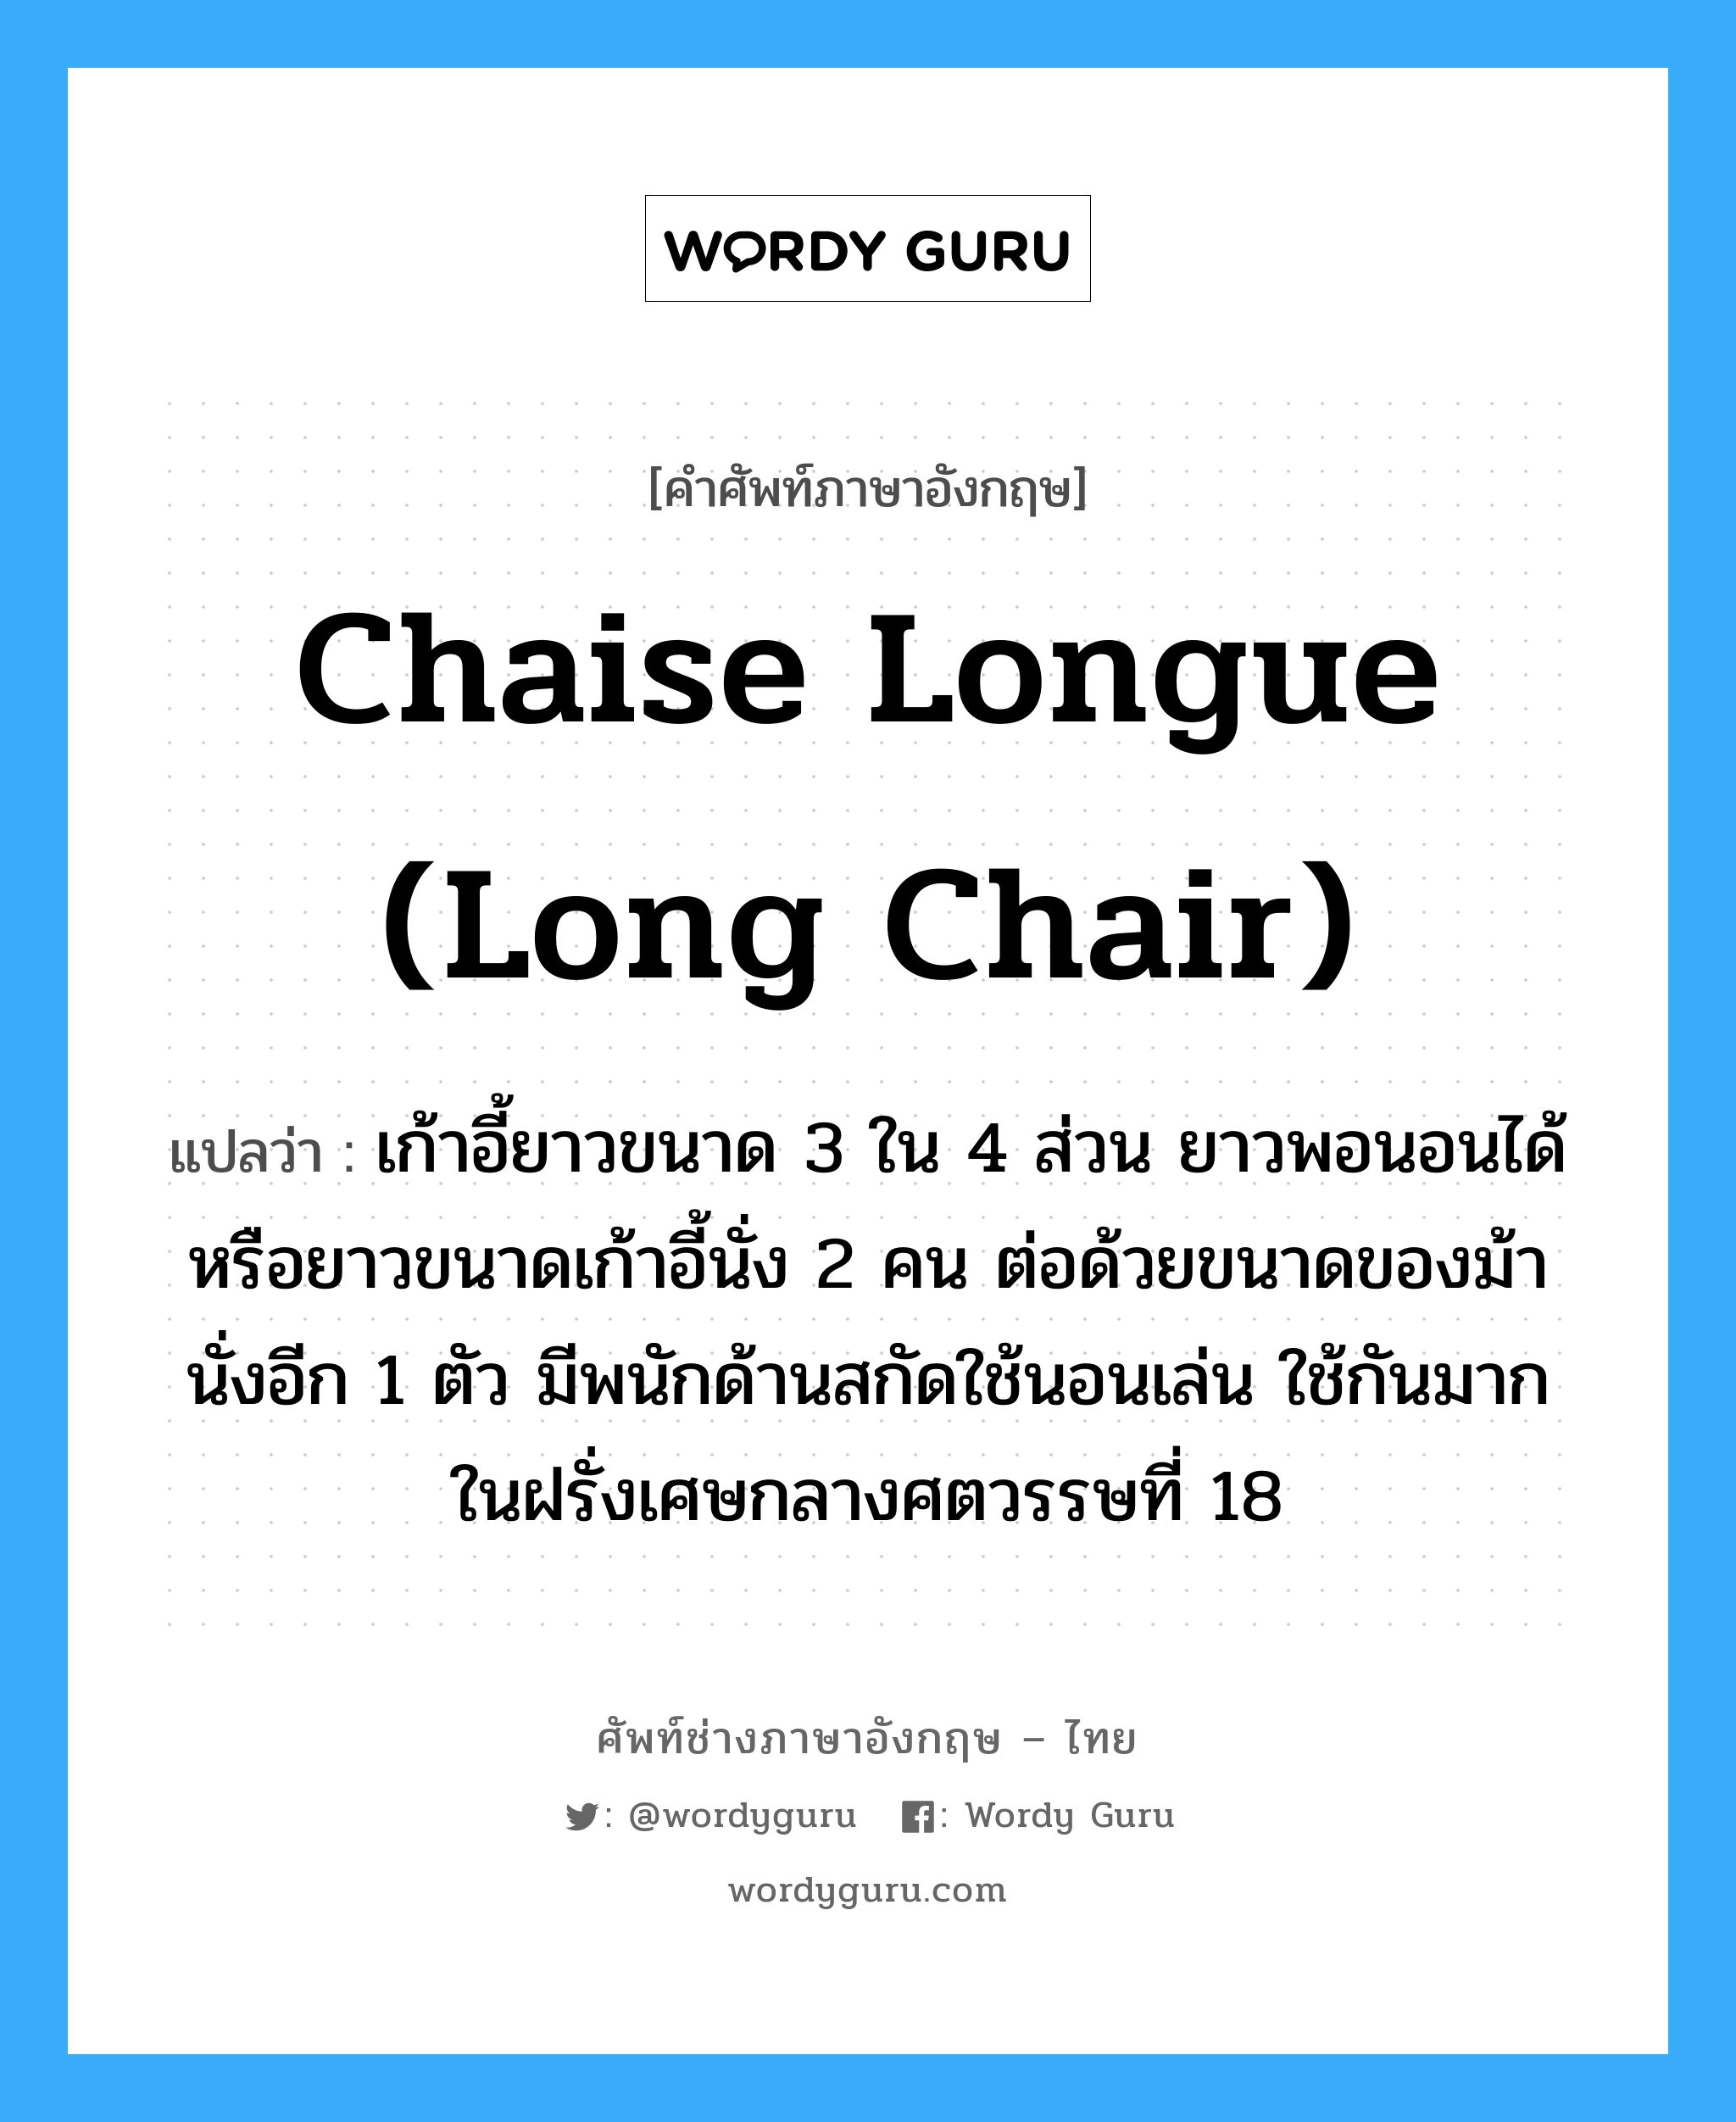 chaise longue (long chair) แปลว่า?, คำศัพท์ช่างภาษาอังกฤษ - ไทย chaise longue (long chair) คำศัพท์ภาษาอังกฤษ chaise longue (long chair) แปลว่า เก้าอี้ยาวขนาด 3 ใน 4 ส่วน ยาวพอนอนได้ หรือยาวขนาดเก้าอี้นั่ง 2 คน ต่อด้วยขนาดของม้านั่งอีก 1 ตัว มีพนักด้านสกัดใช้นอนเล่น ใช้กันมากในฝรั่งเศษกลางศตวรรษที่ 18